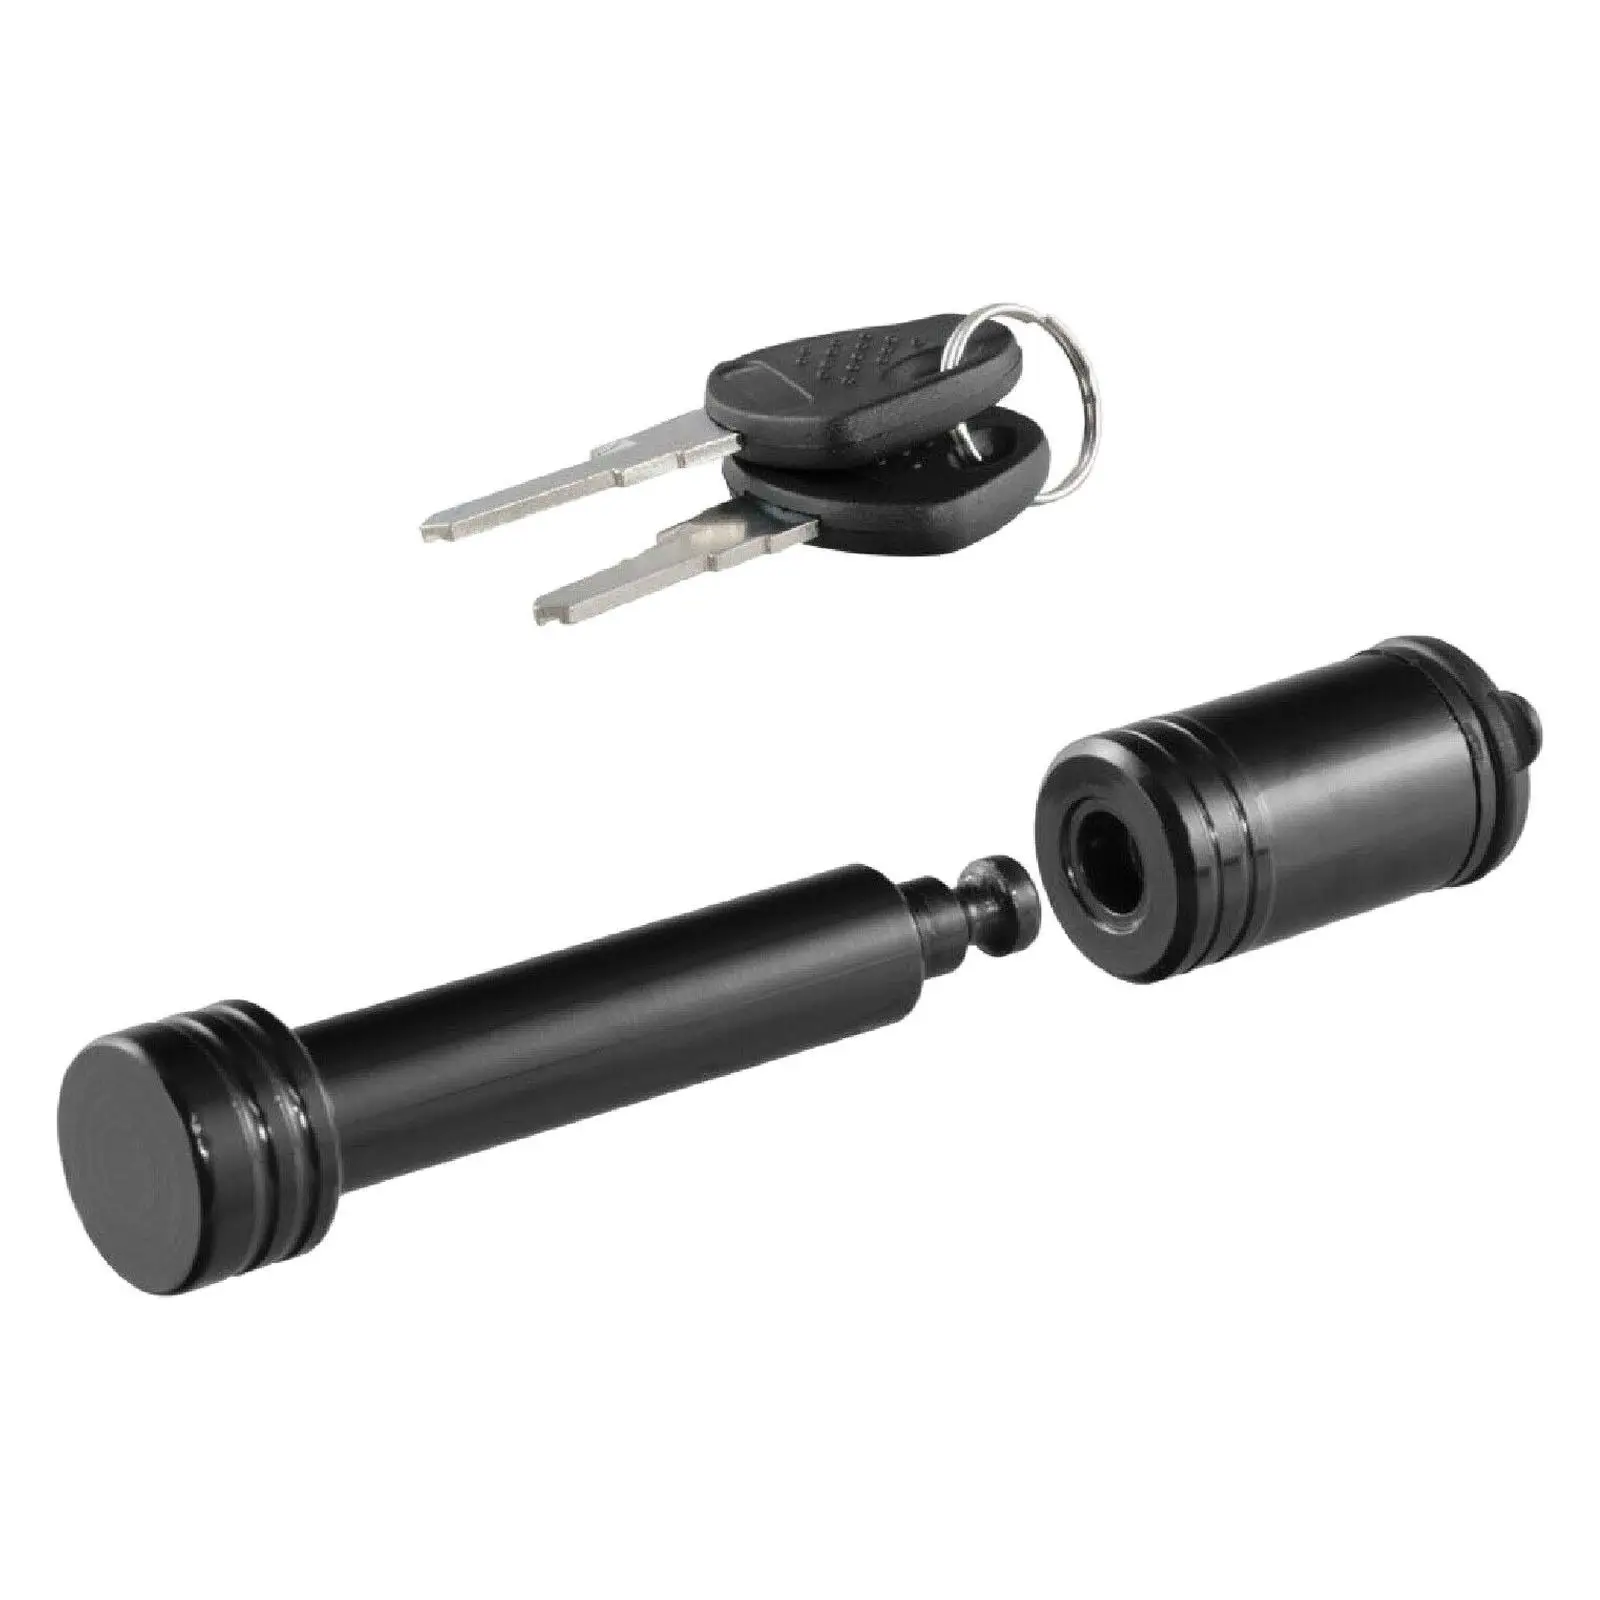 

Universal Trailer Hitch Lock 5/8-Inch Pin Diameter Curt 23518 2 Keys Weatherproof for 2-Inch Receiver Tow Trailer Car